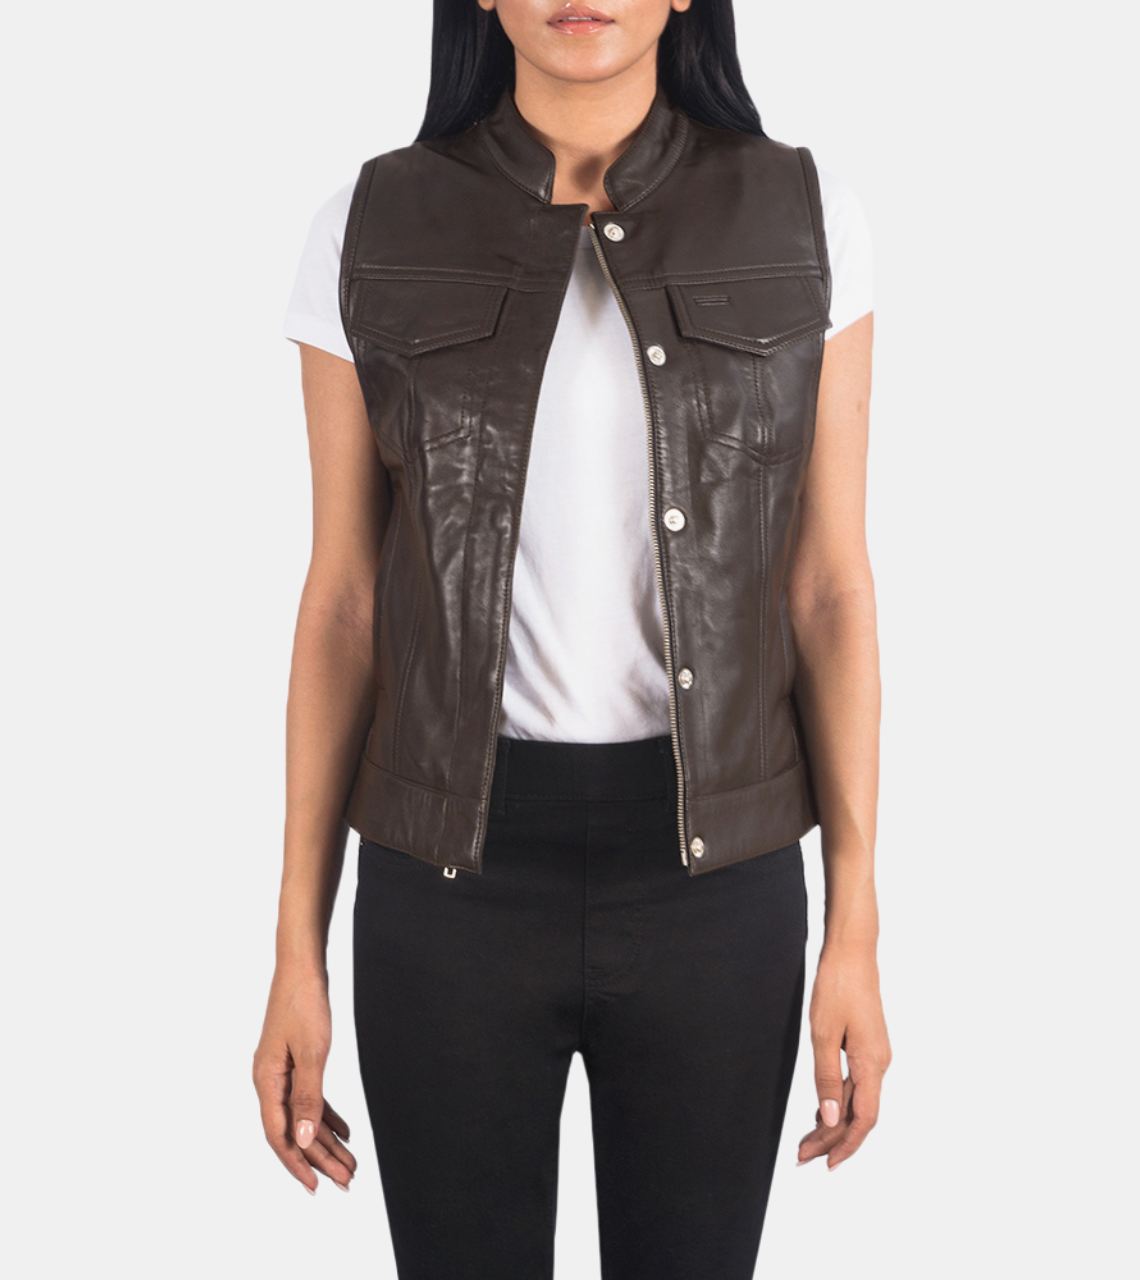 Clendy Women's Brown Leather Vest